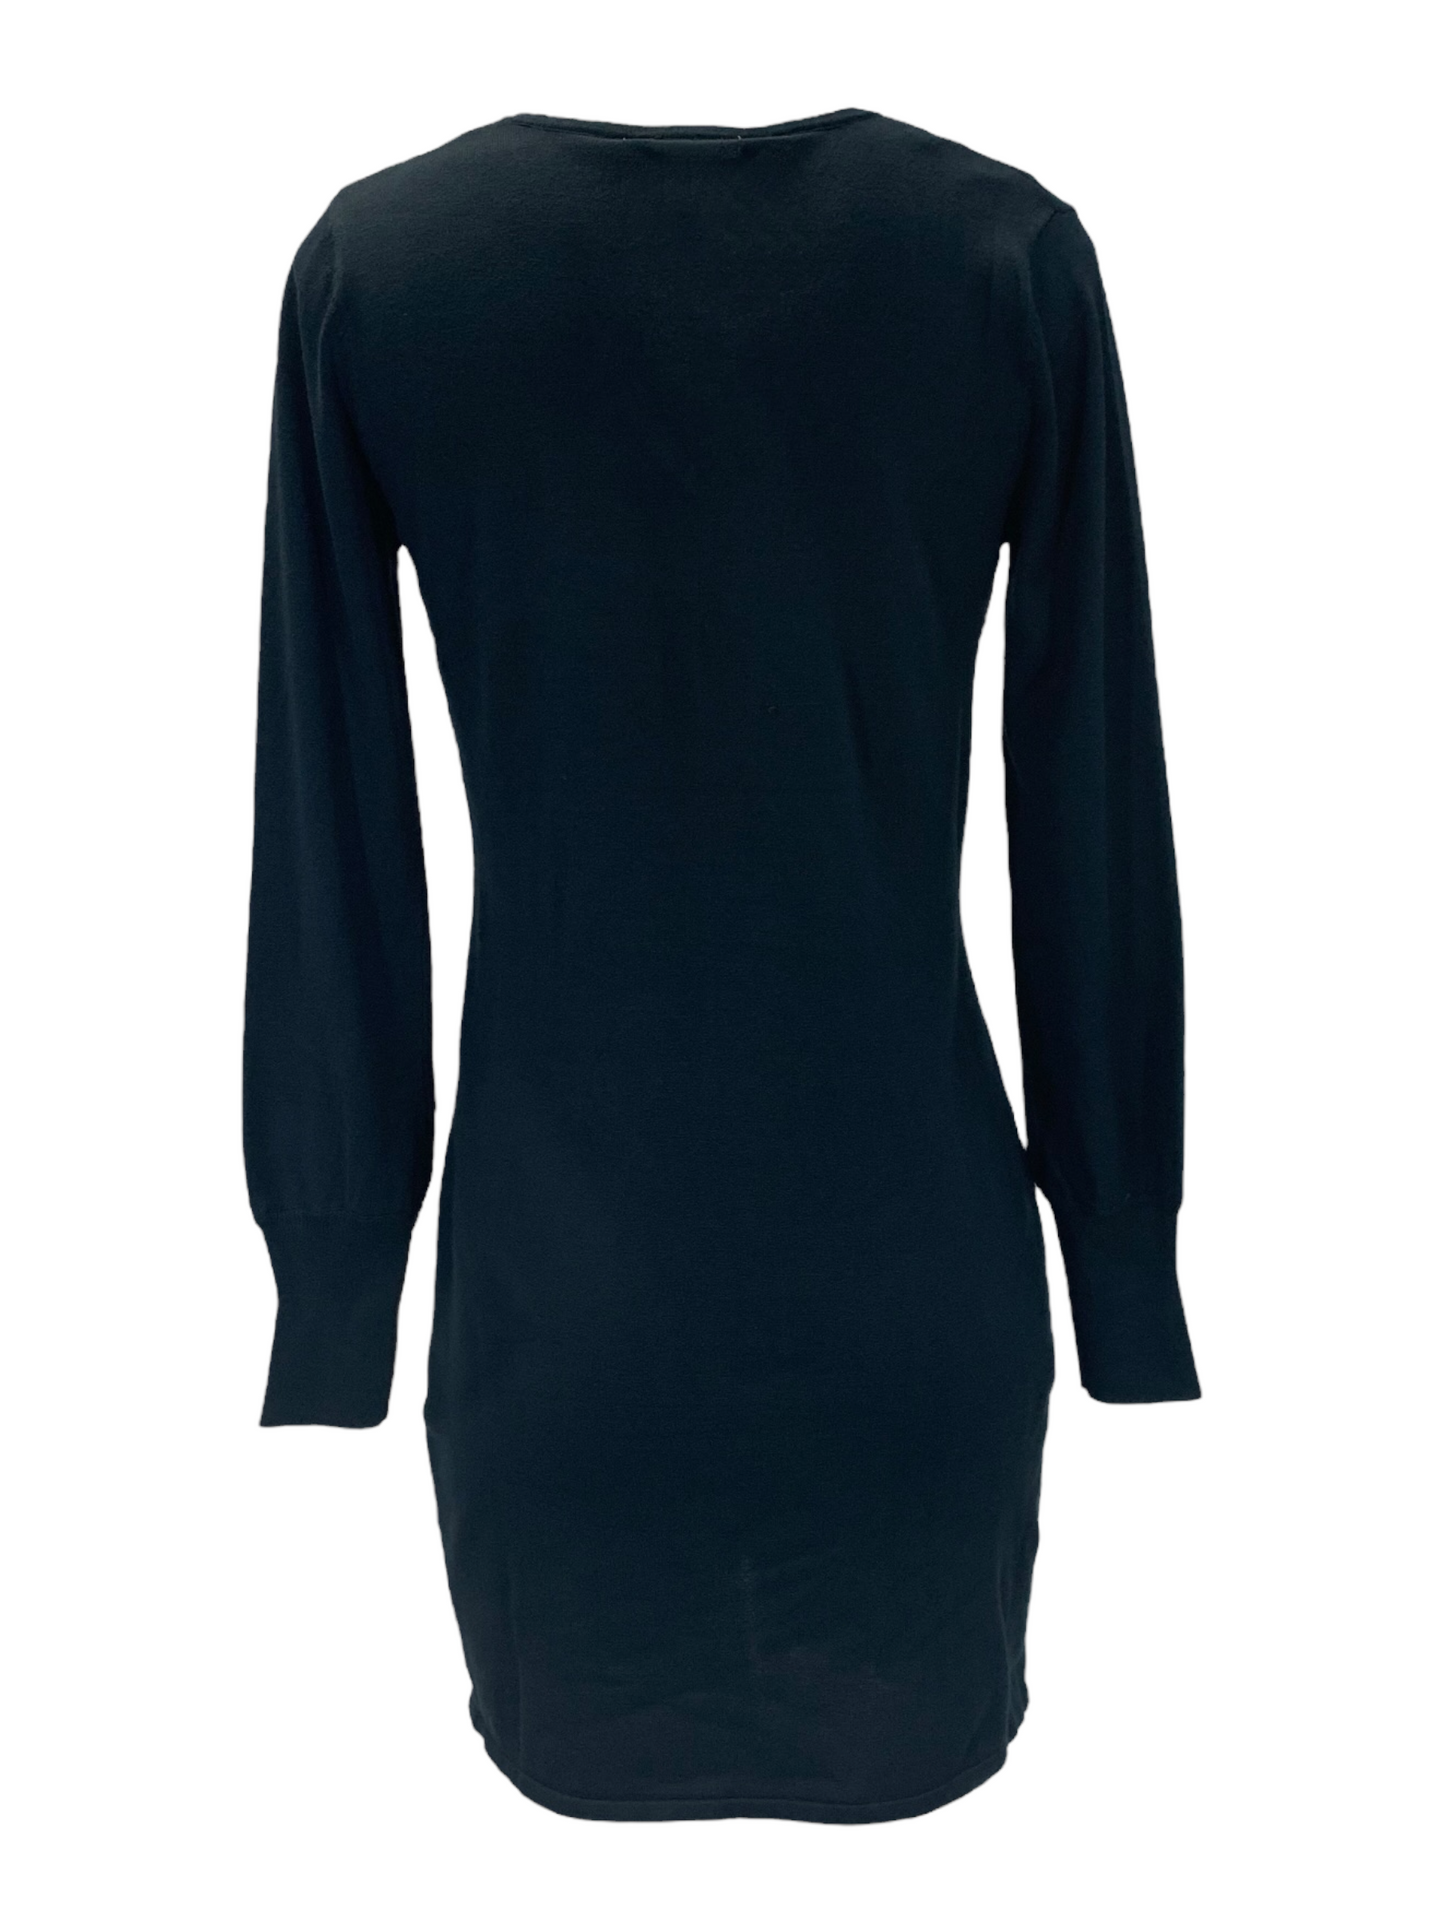 Women's Mandarine&Co black knit dress